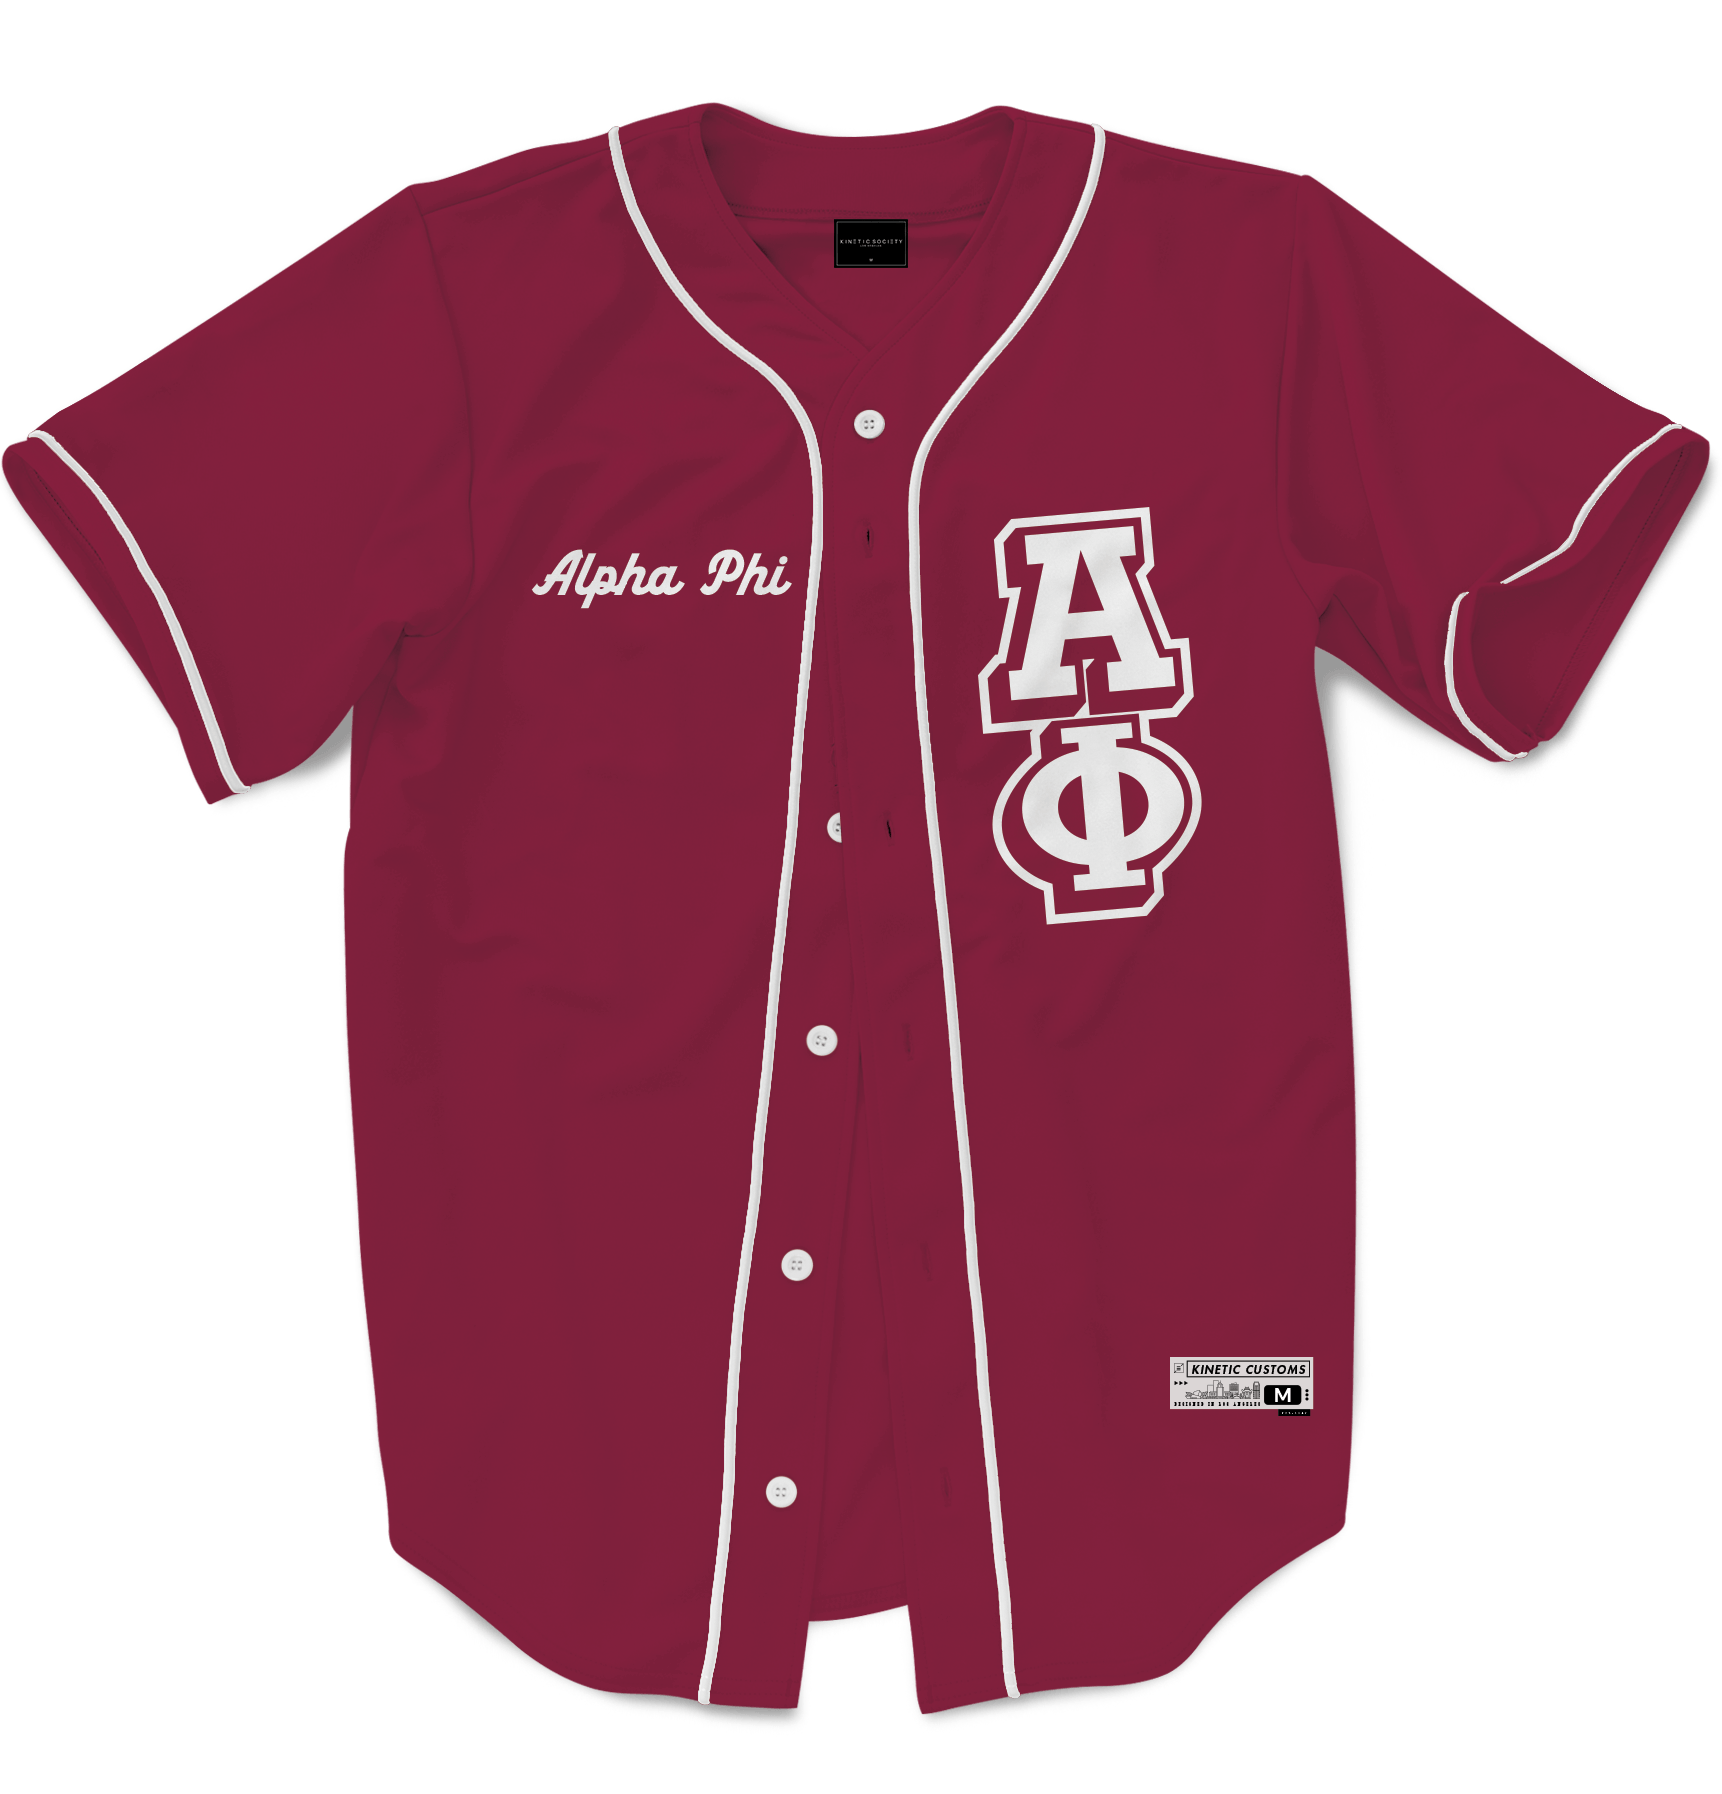 ALPHA PHI - The Block Baseball Jersey Premium Baseball Kinetic Society LLC 